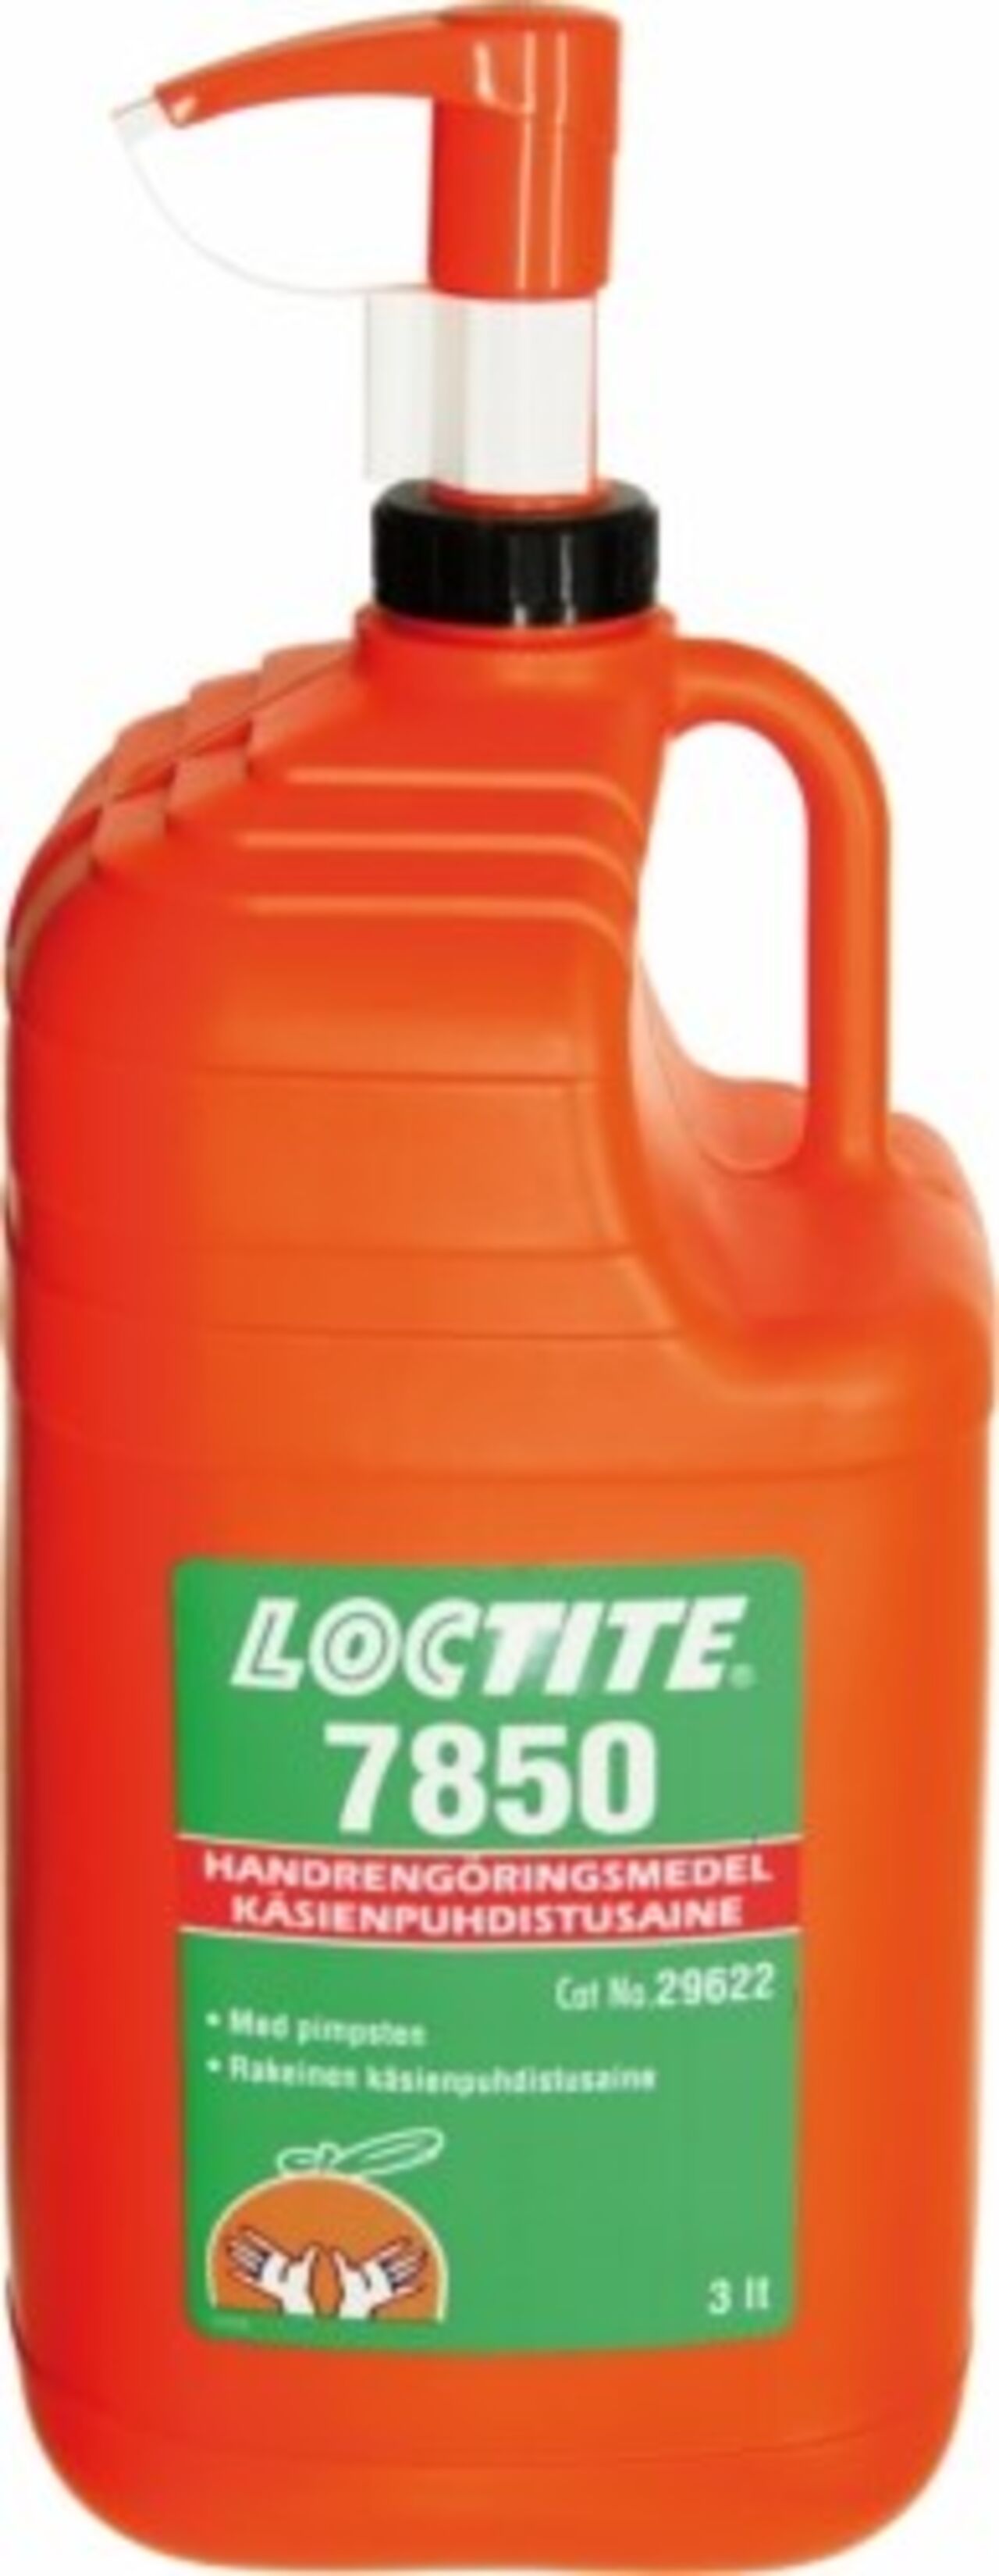 Loctite Loctite håndrens sitrus 7850 3 liter 1